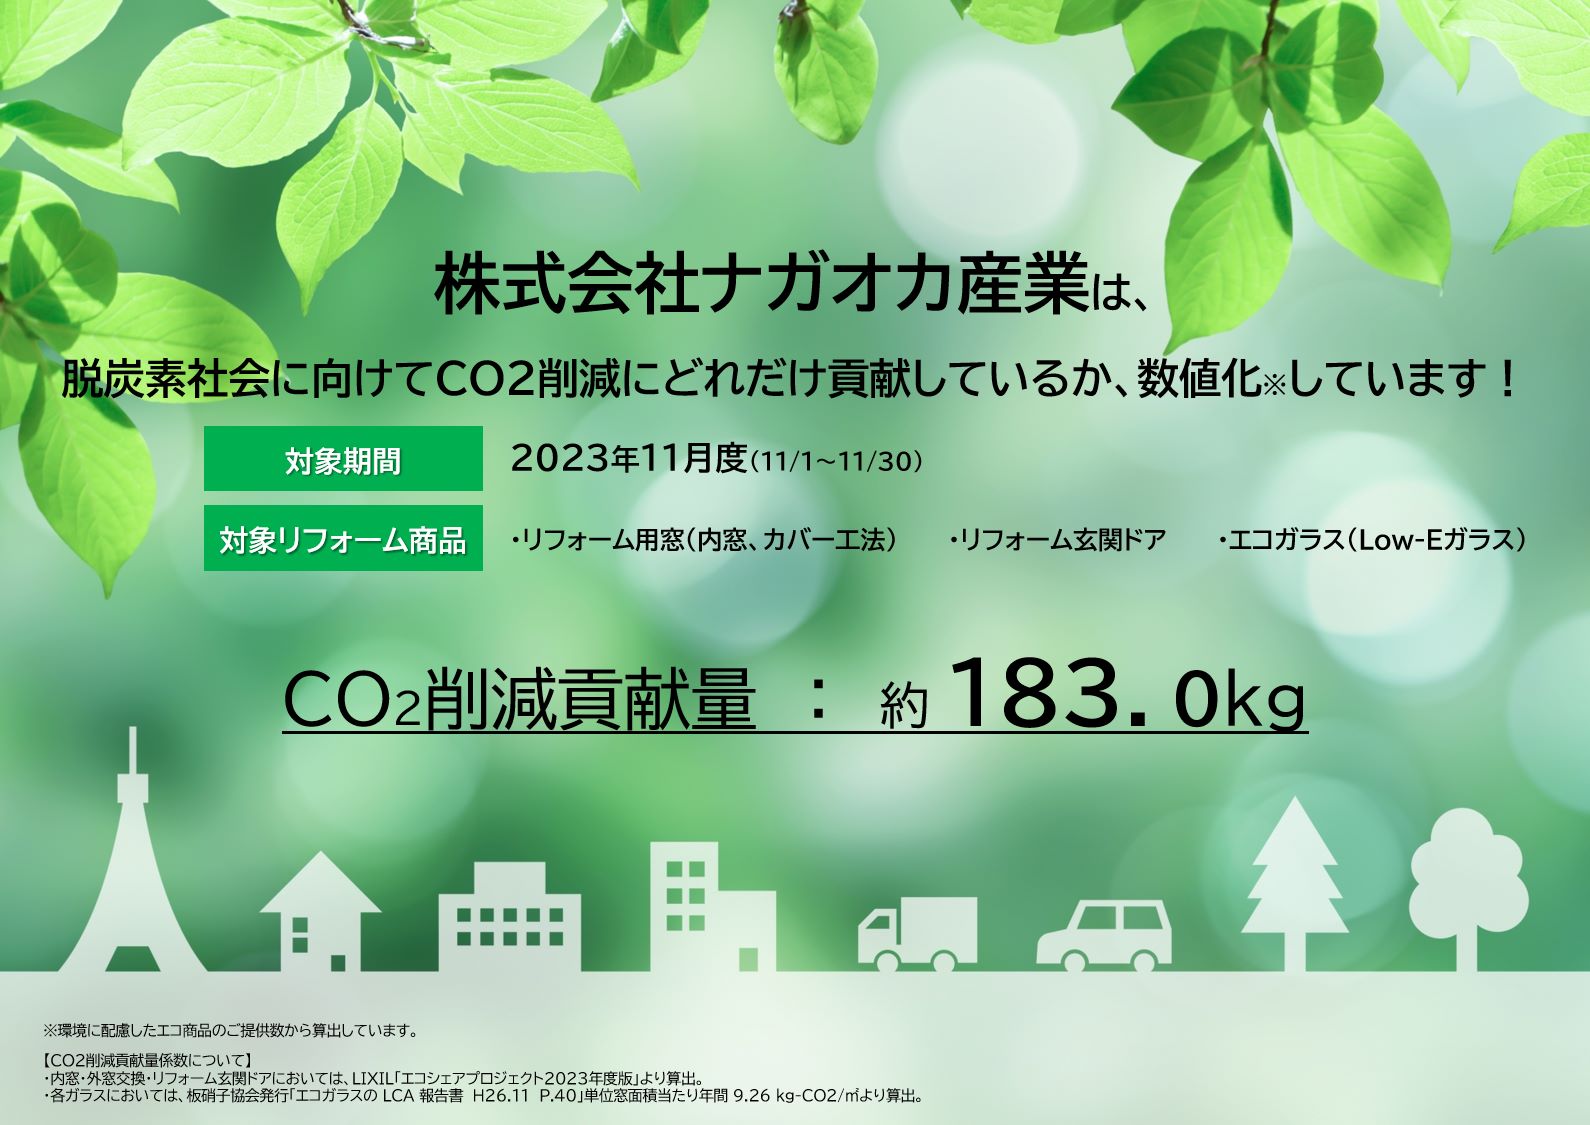 CO2削減貢献量の数値化 ナガオカ産業のブログ 写真1